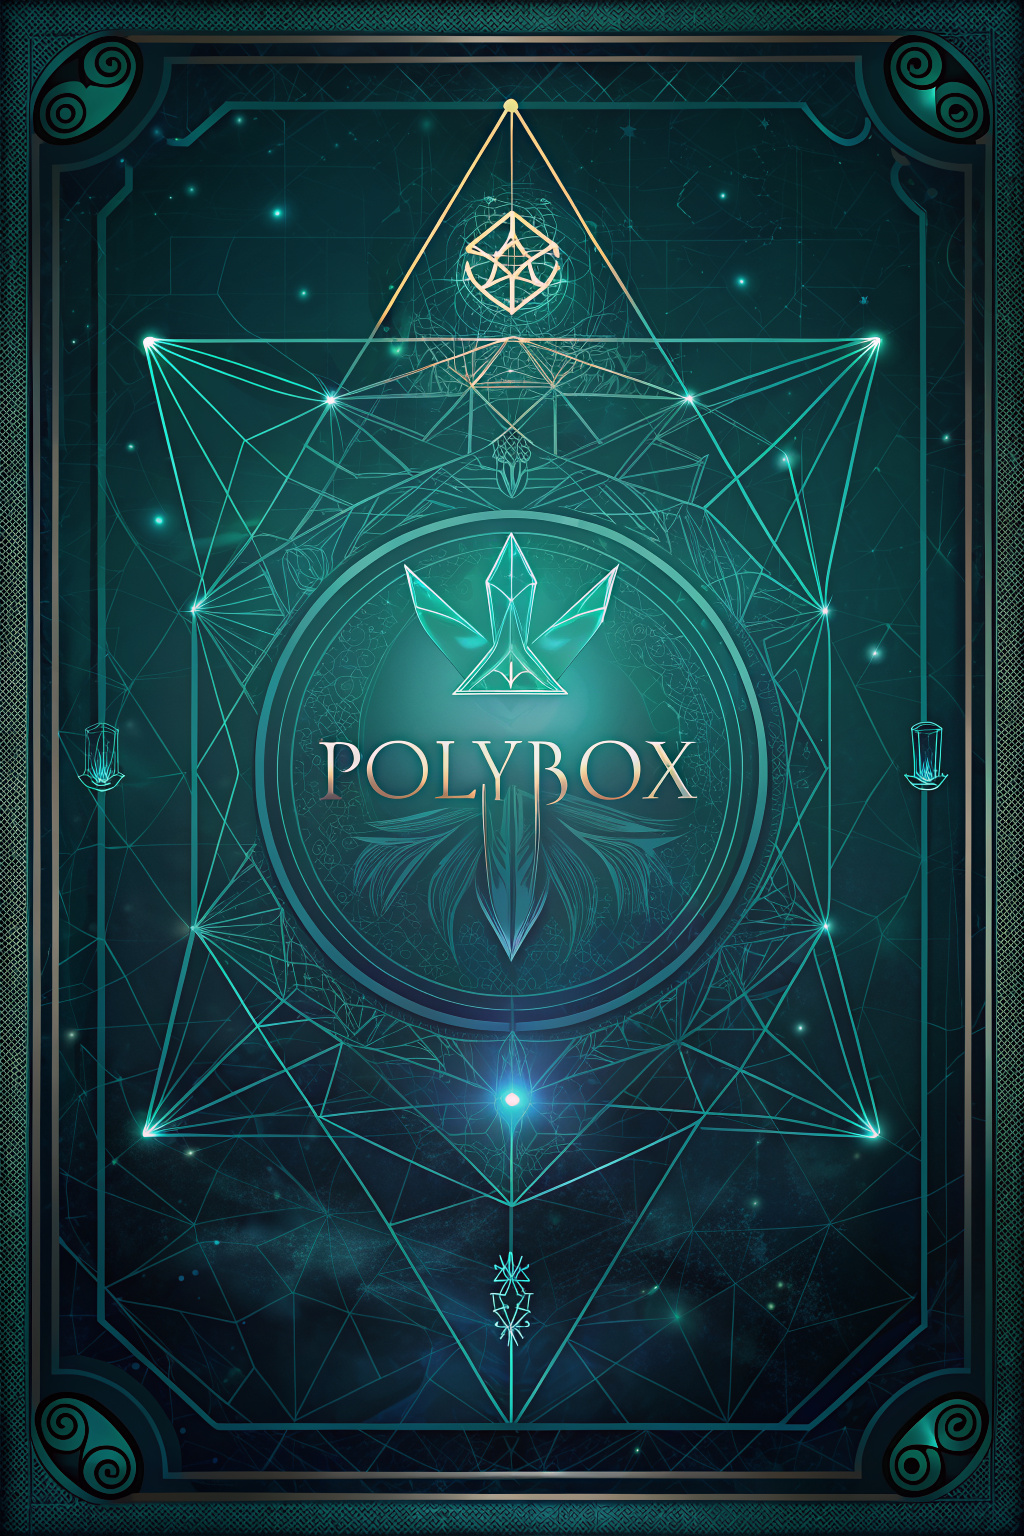 turn text "POLYBOX" like a tarot cards